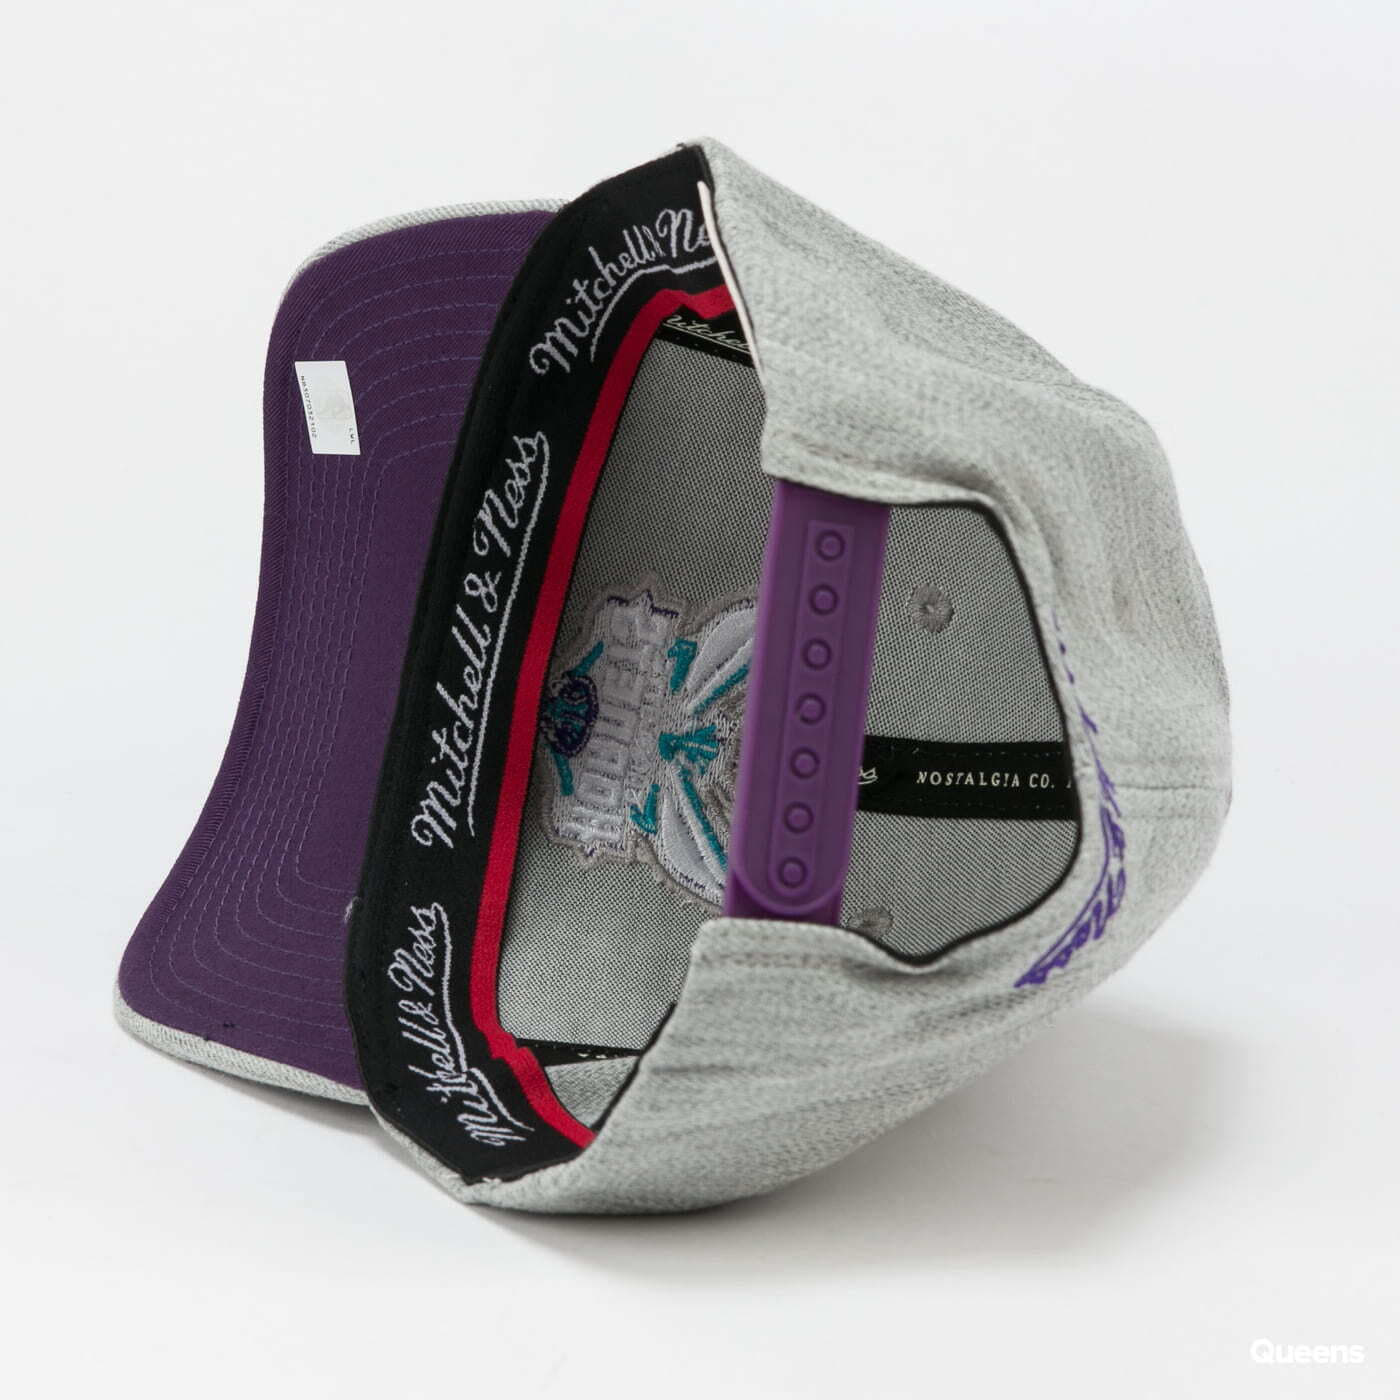 Mitchell & Ness Charlotte Hornets Snapback Hat - Purple/Black/Throwback -  Basketball Cap for Men